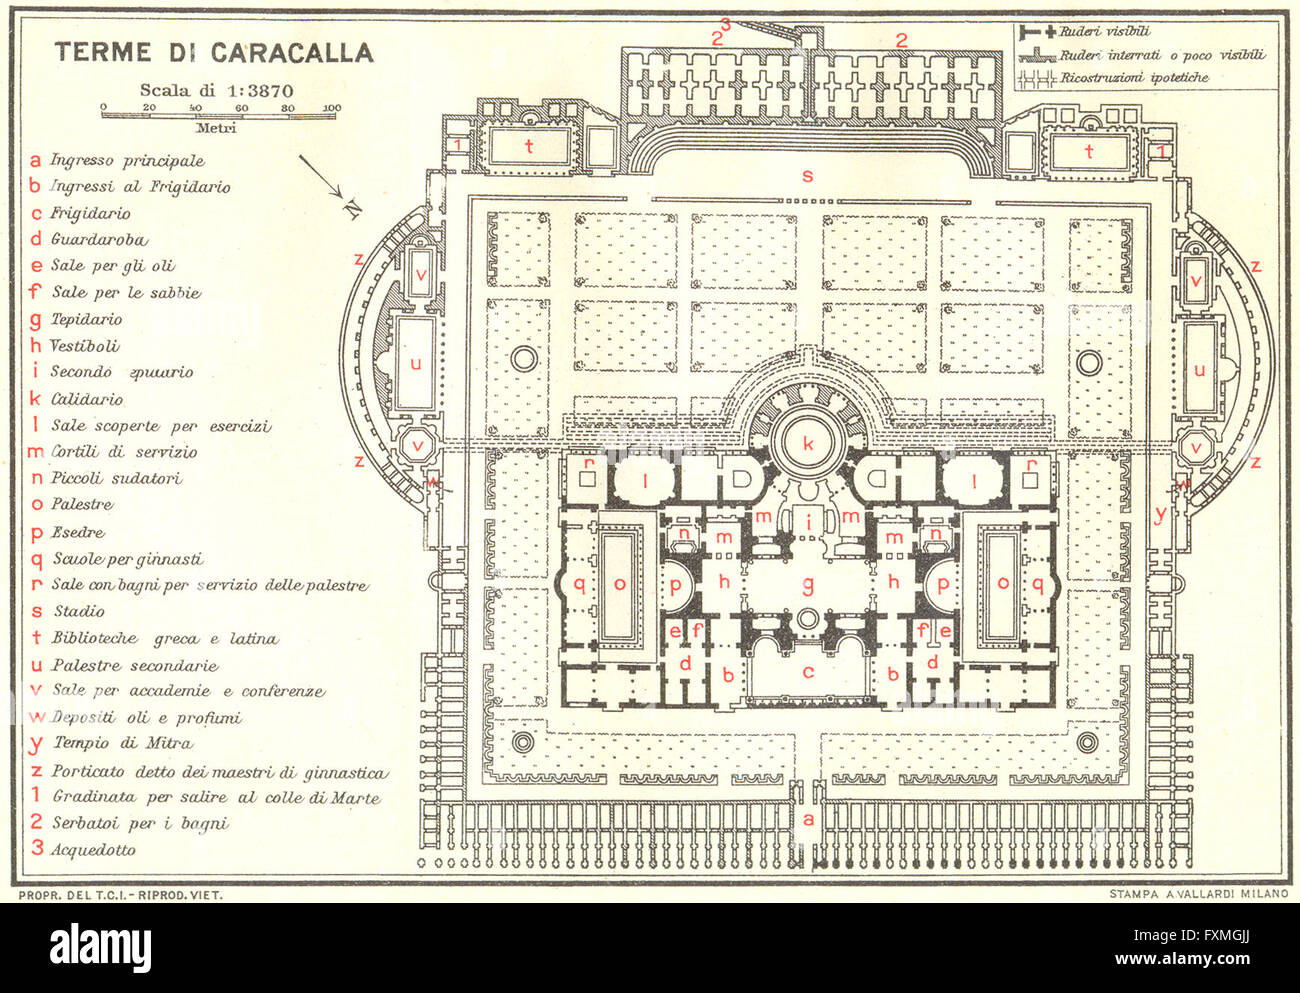 ROME: Terme Di Caracalla, 1925 vintage map Stock Photo